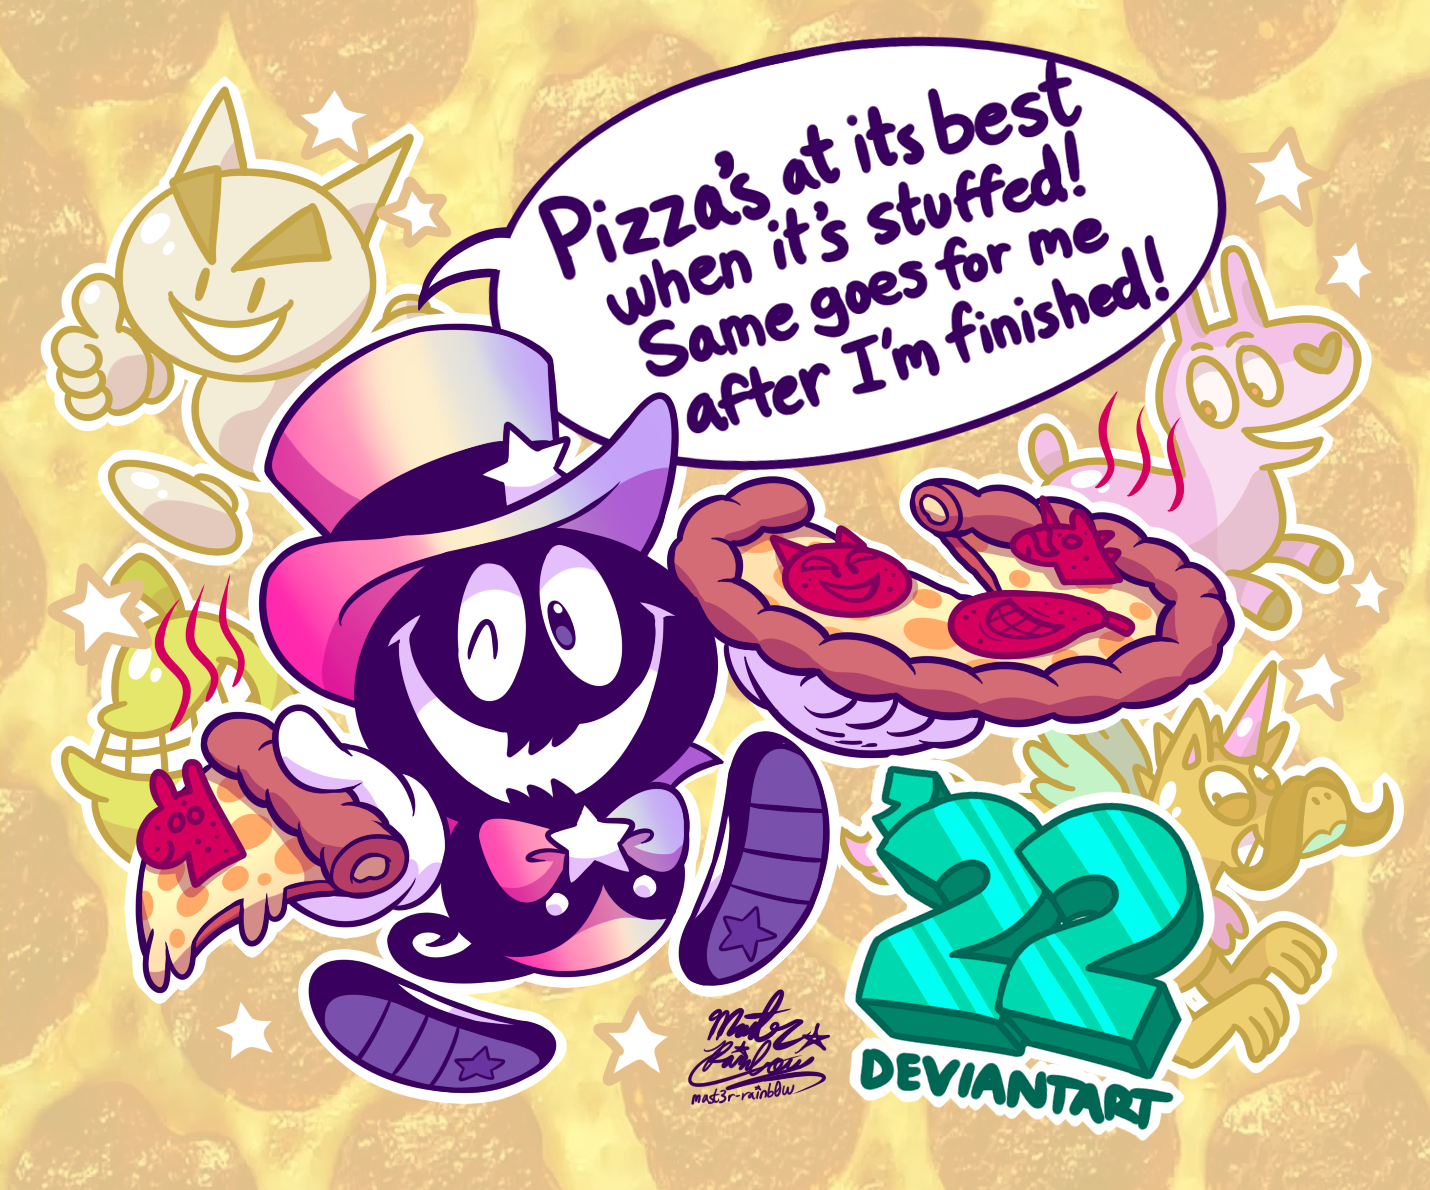 Minus Rainbow Friends concept. They're showbiz pizza-style